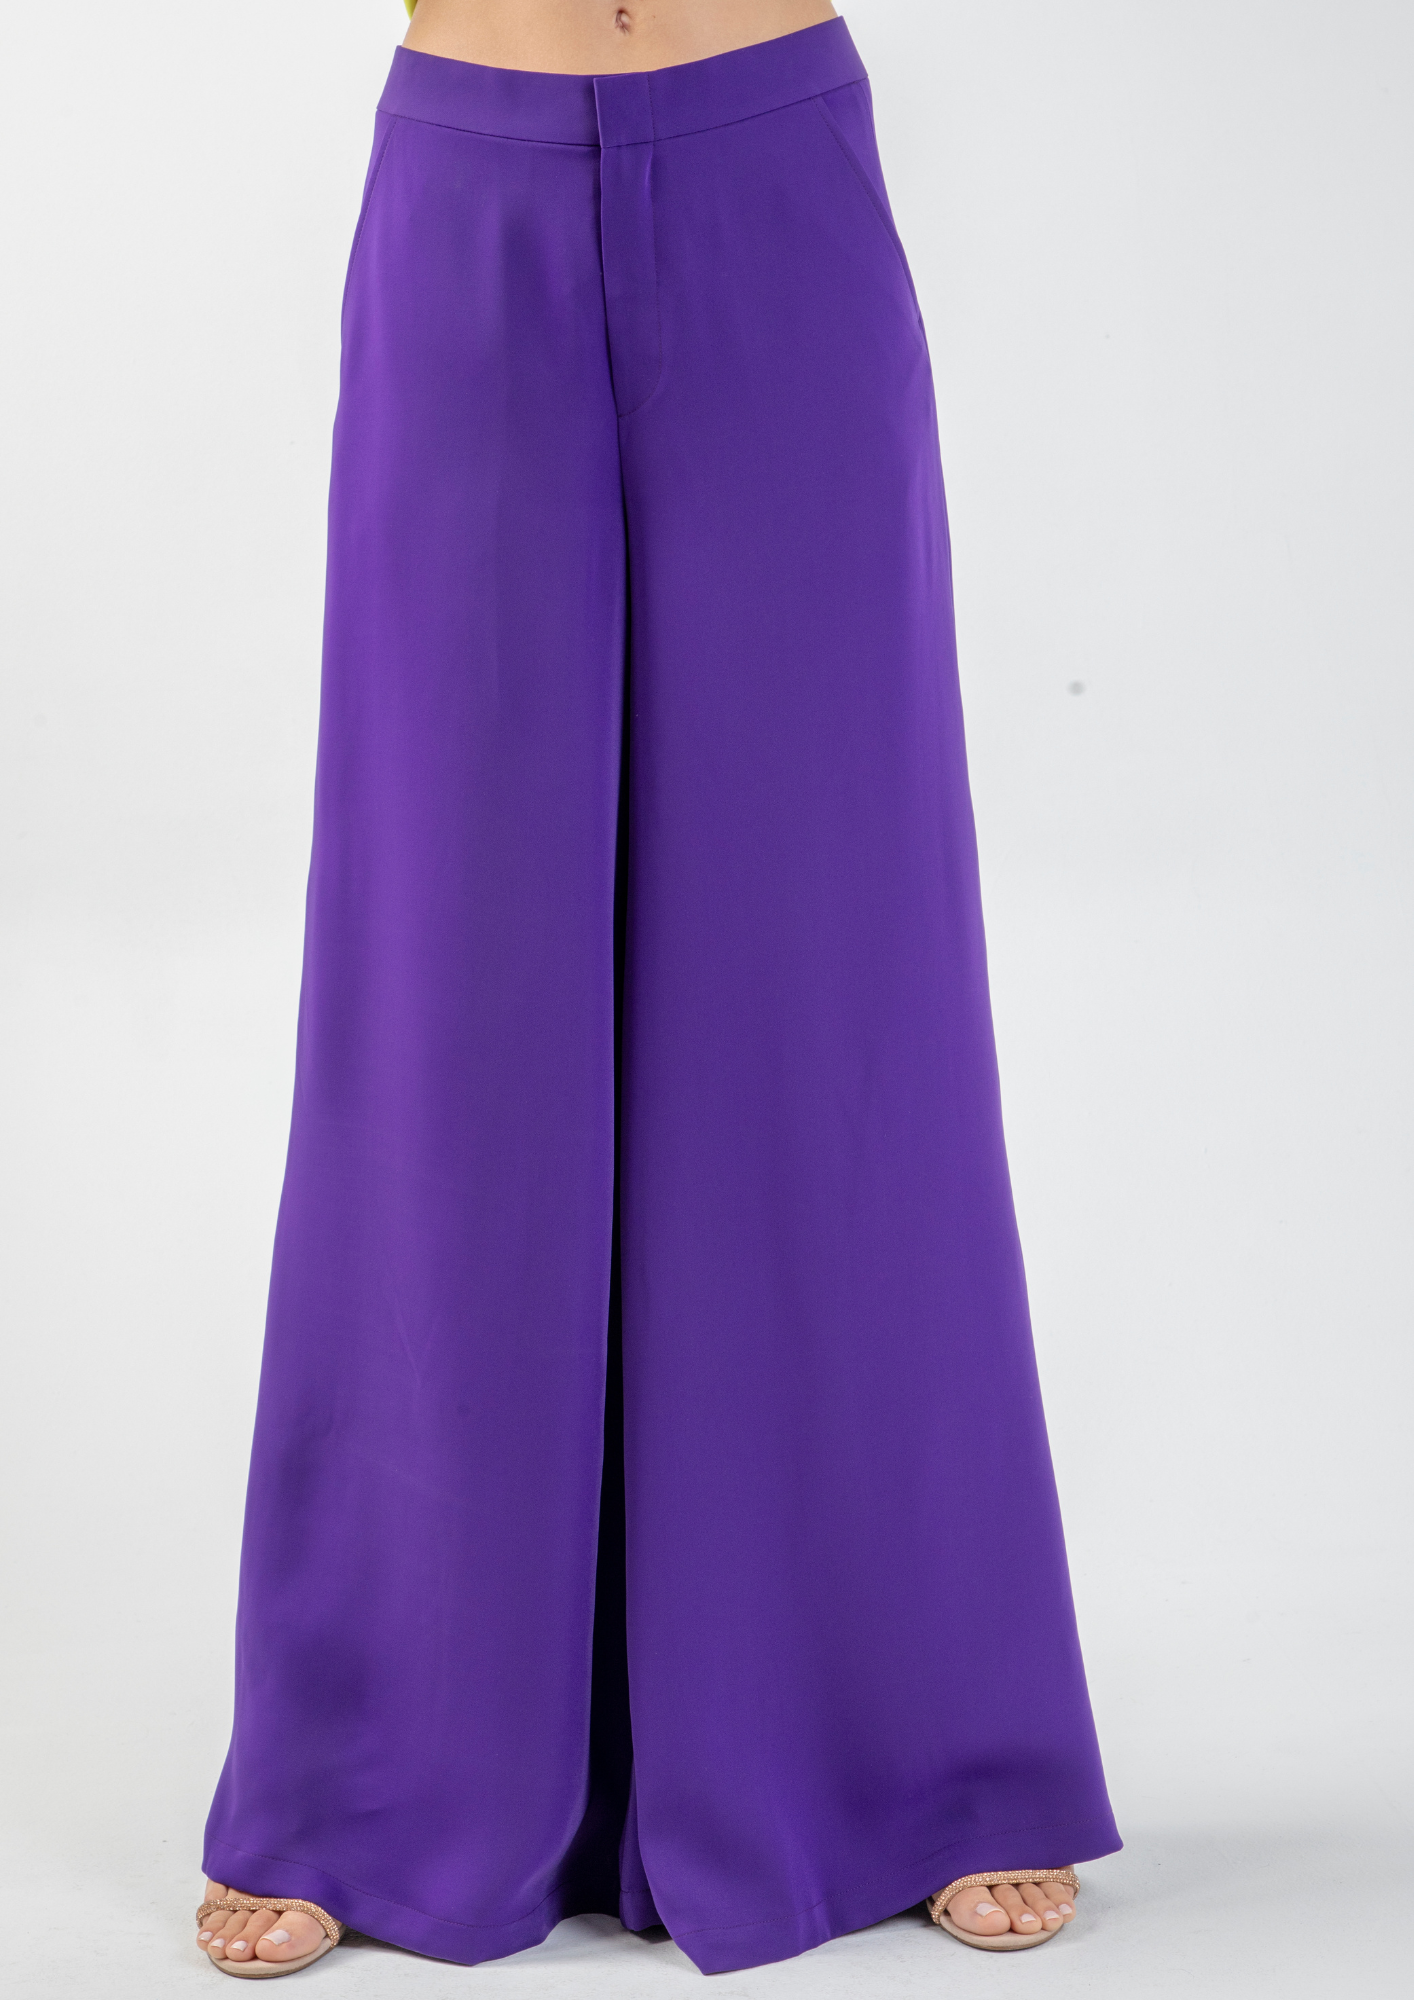 Buy Marie Claire Women Casual Purple Colour Solid Regular Pant online